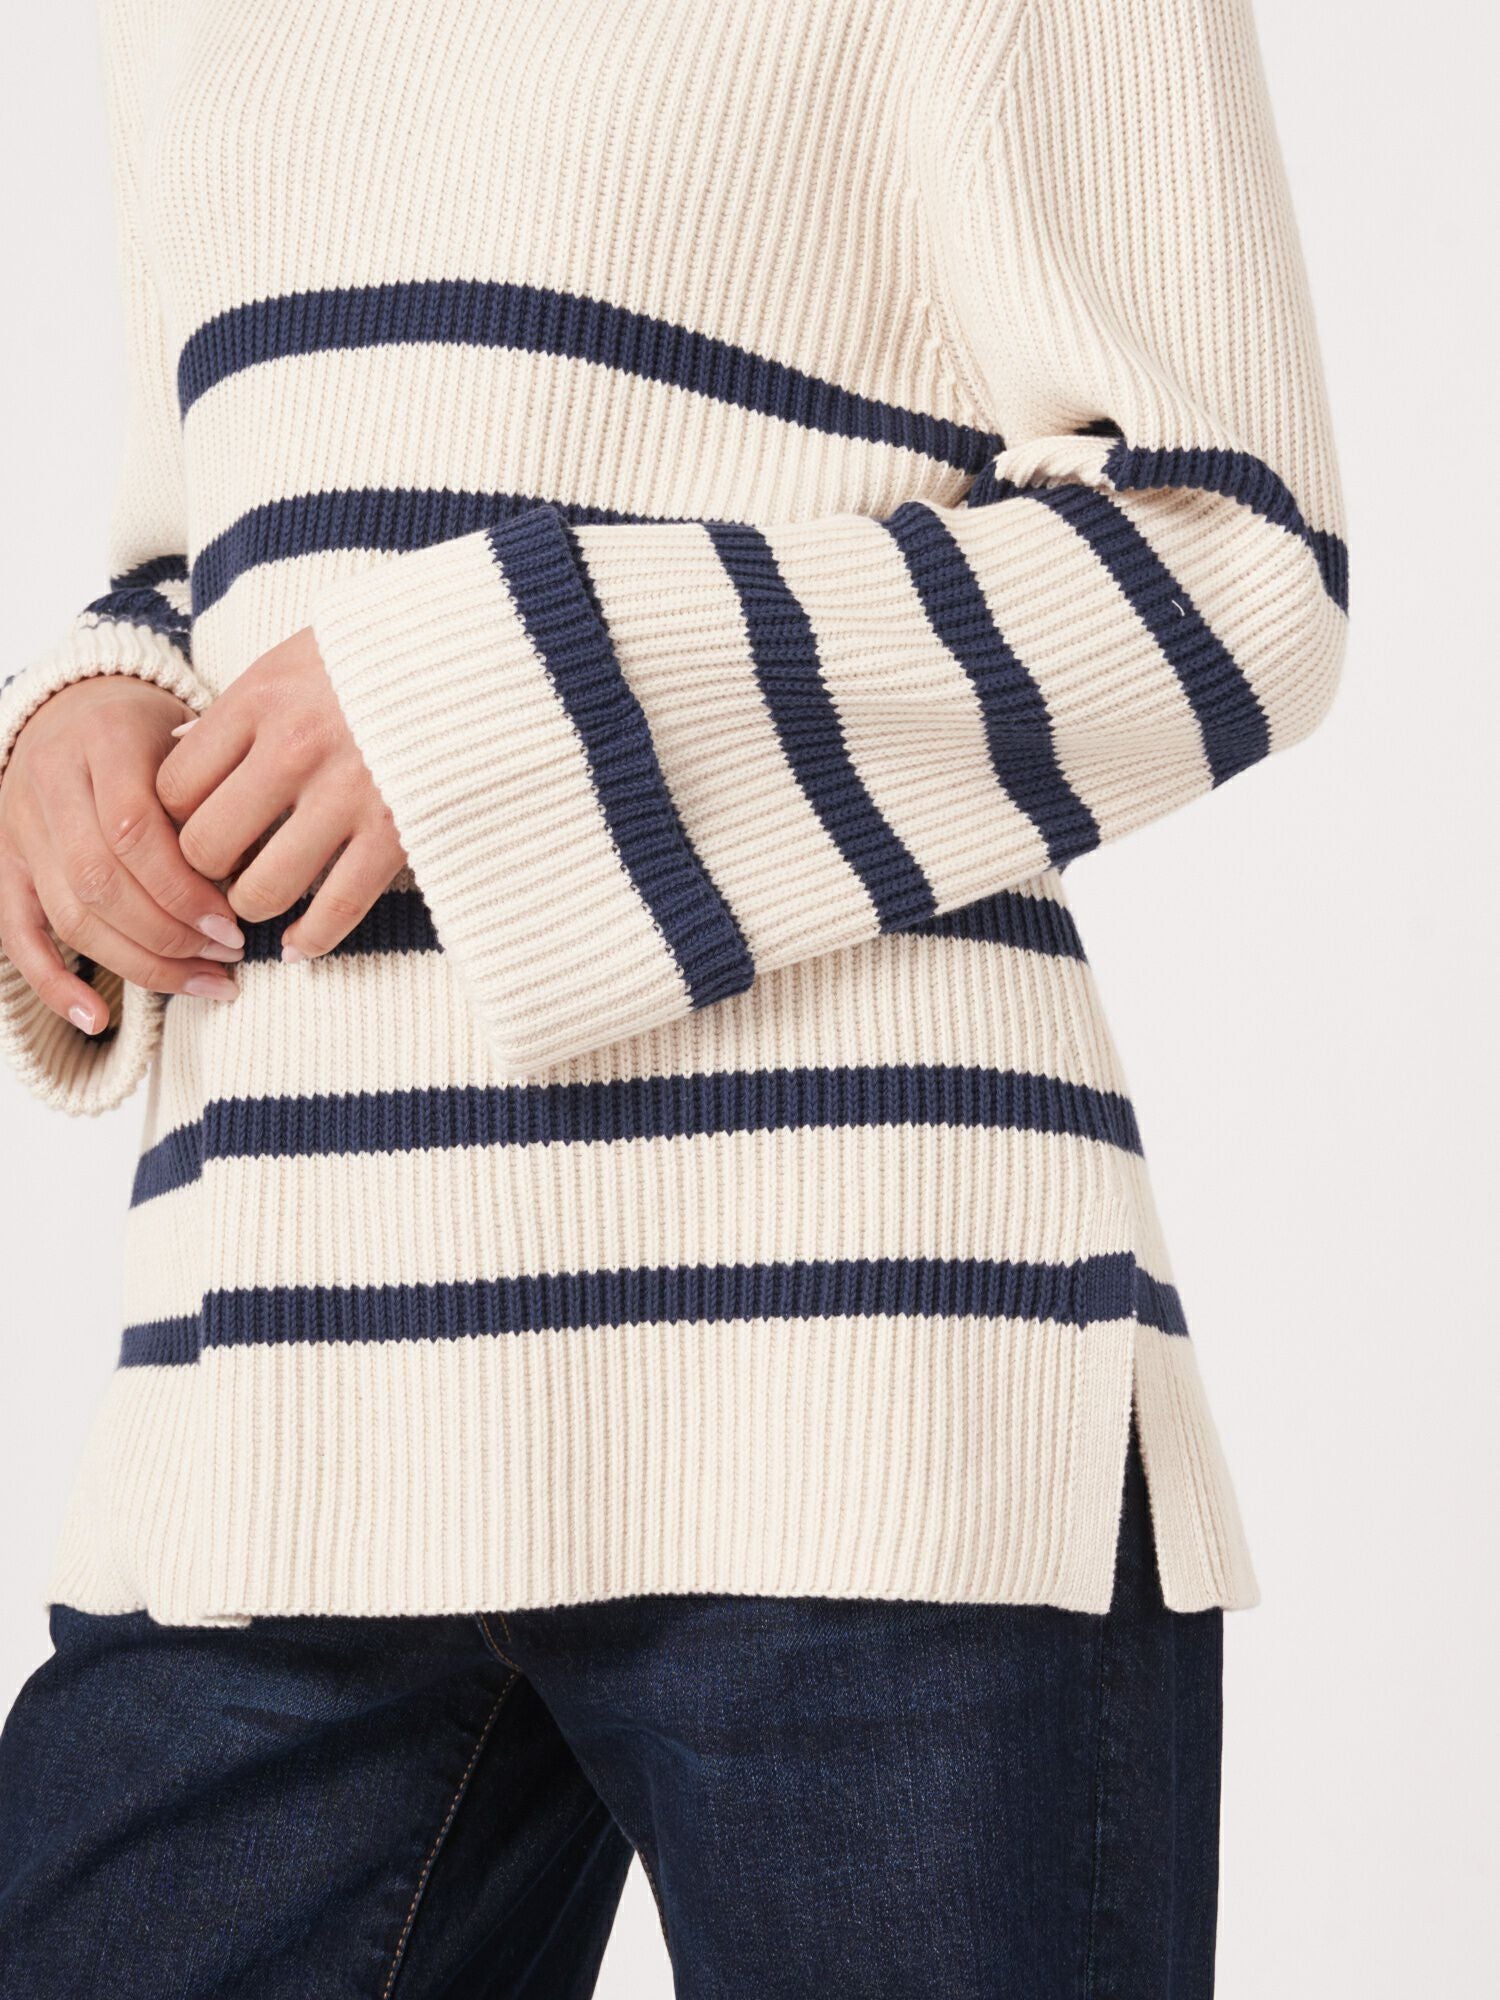 Luxe Sailor Stripe Sweater - Ivory/Marine